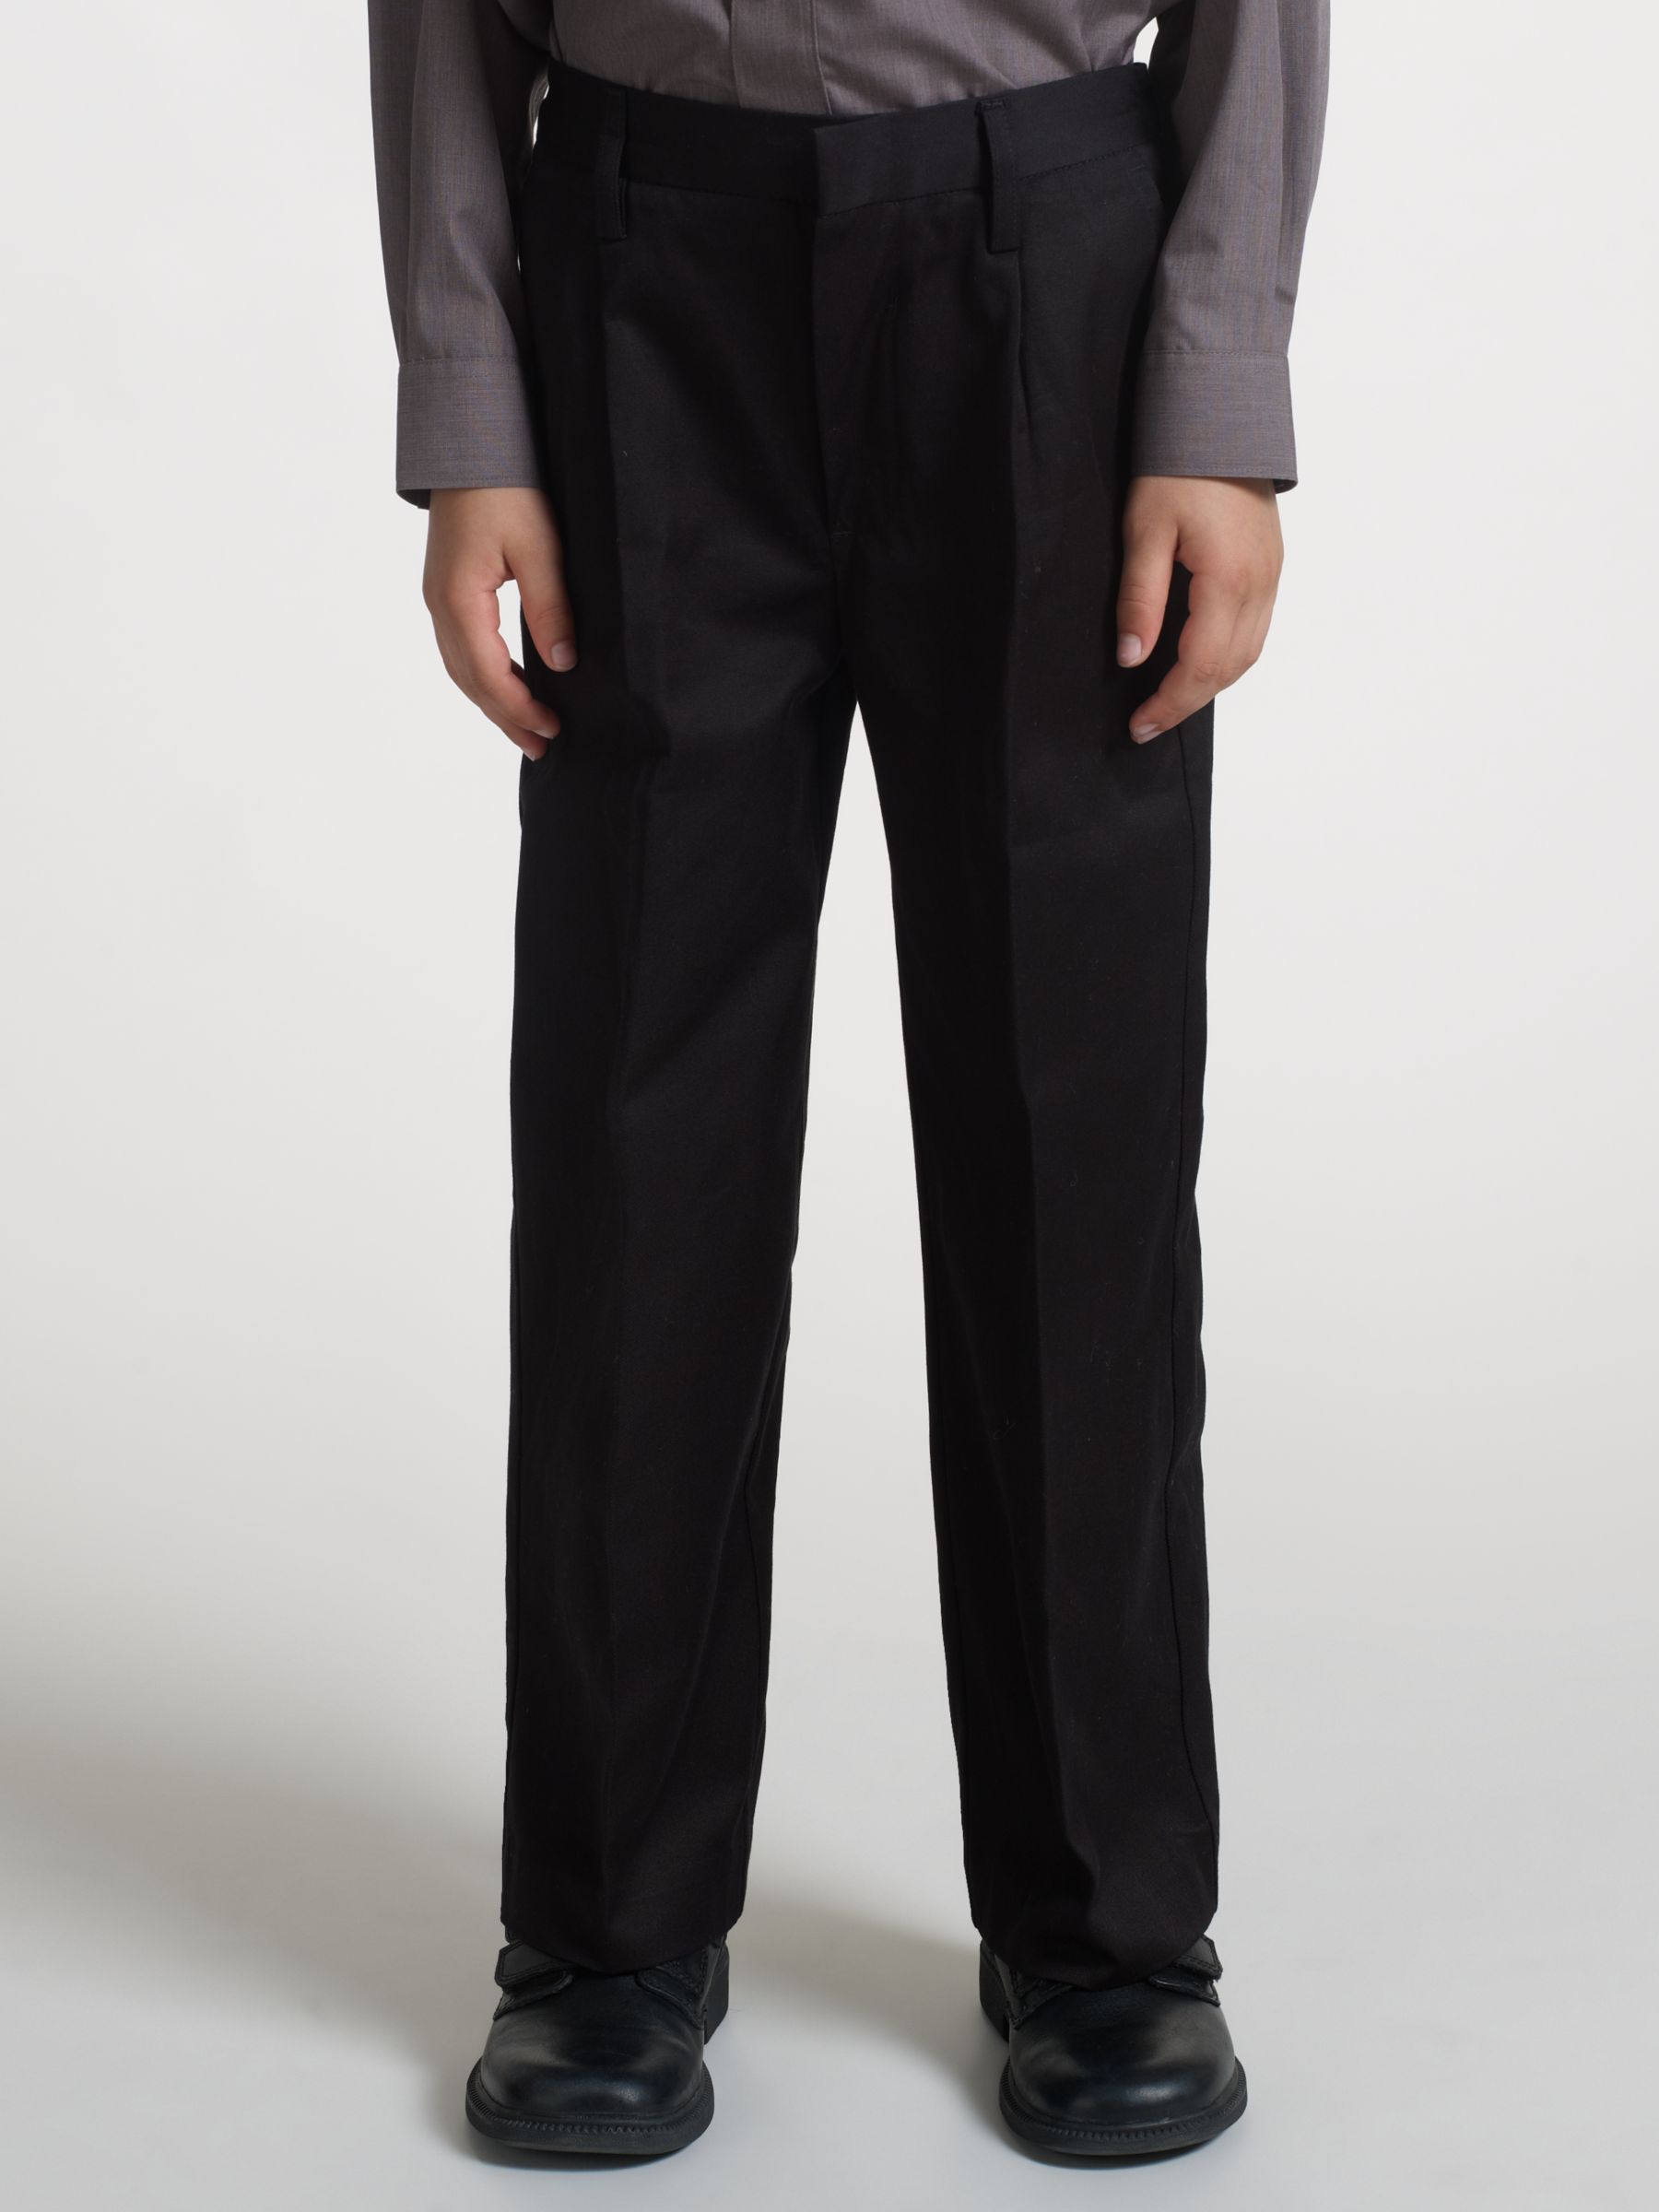 John Lewis & Partners Boys' Pure Cotton Adjustable Waist Straight Leg School Trousers, Black